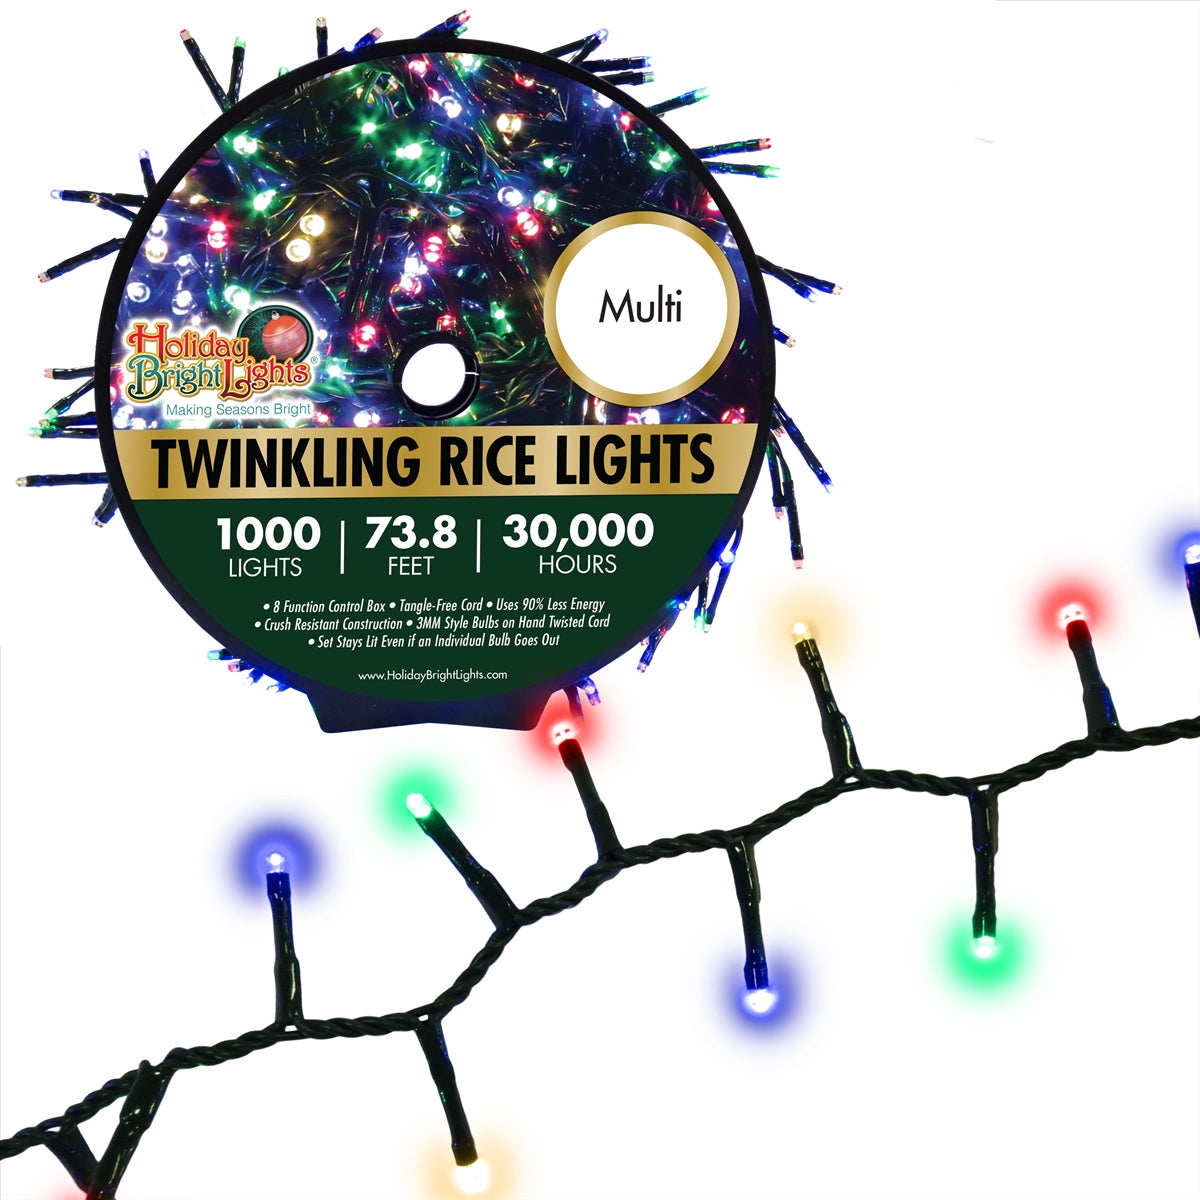 Holiday Bright LED-3MR1000-GMU Twinkling Straight Rice 1000 Multi Light Set, 74'